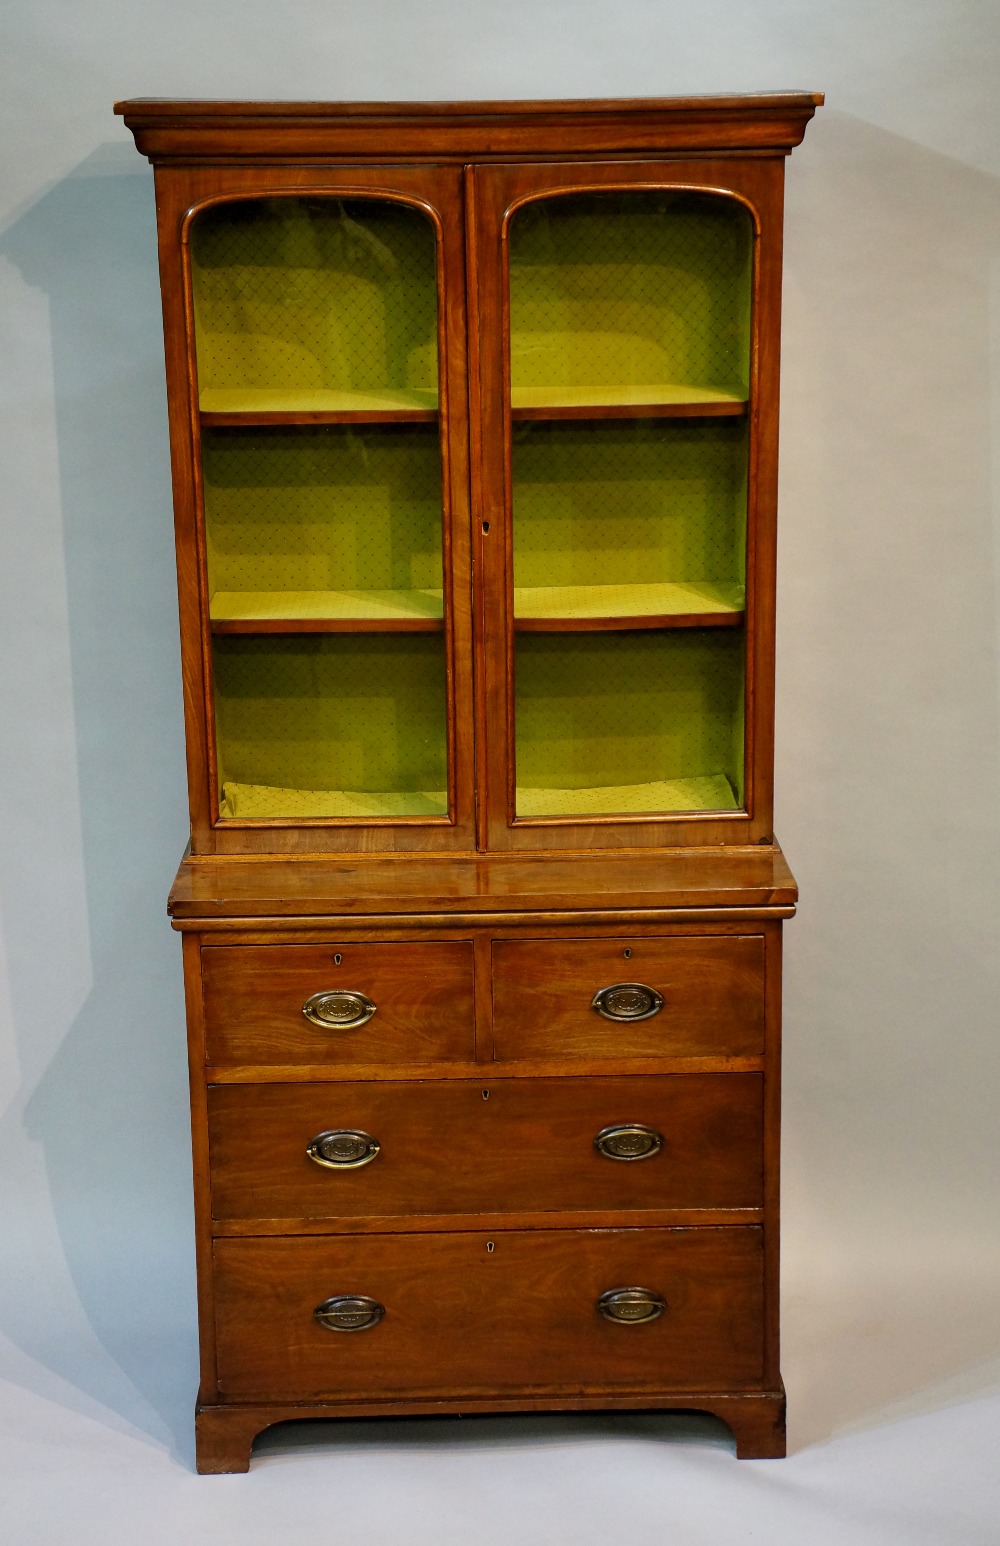 A Victorian mahogany small bookcase or c